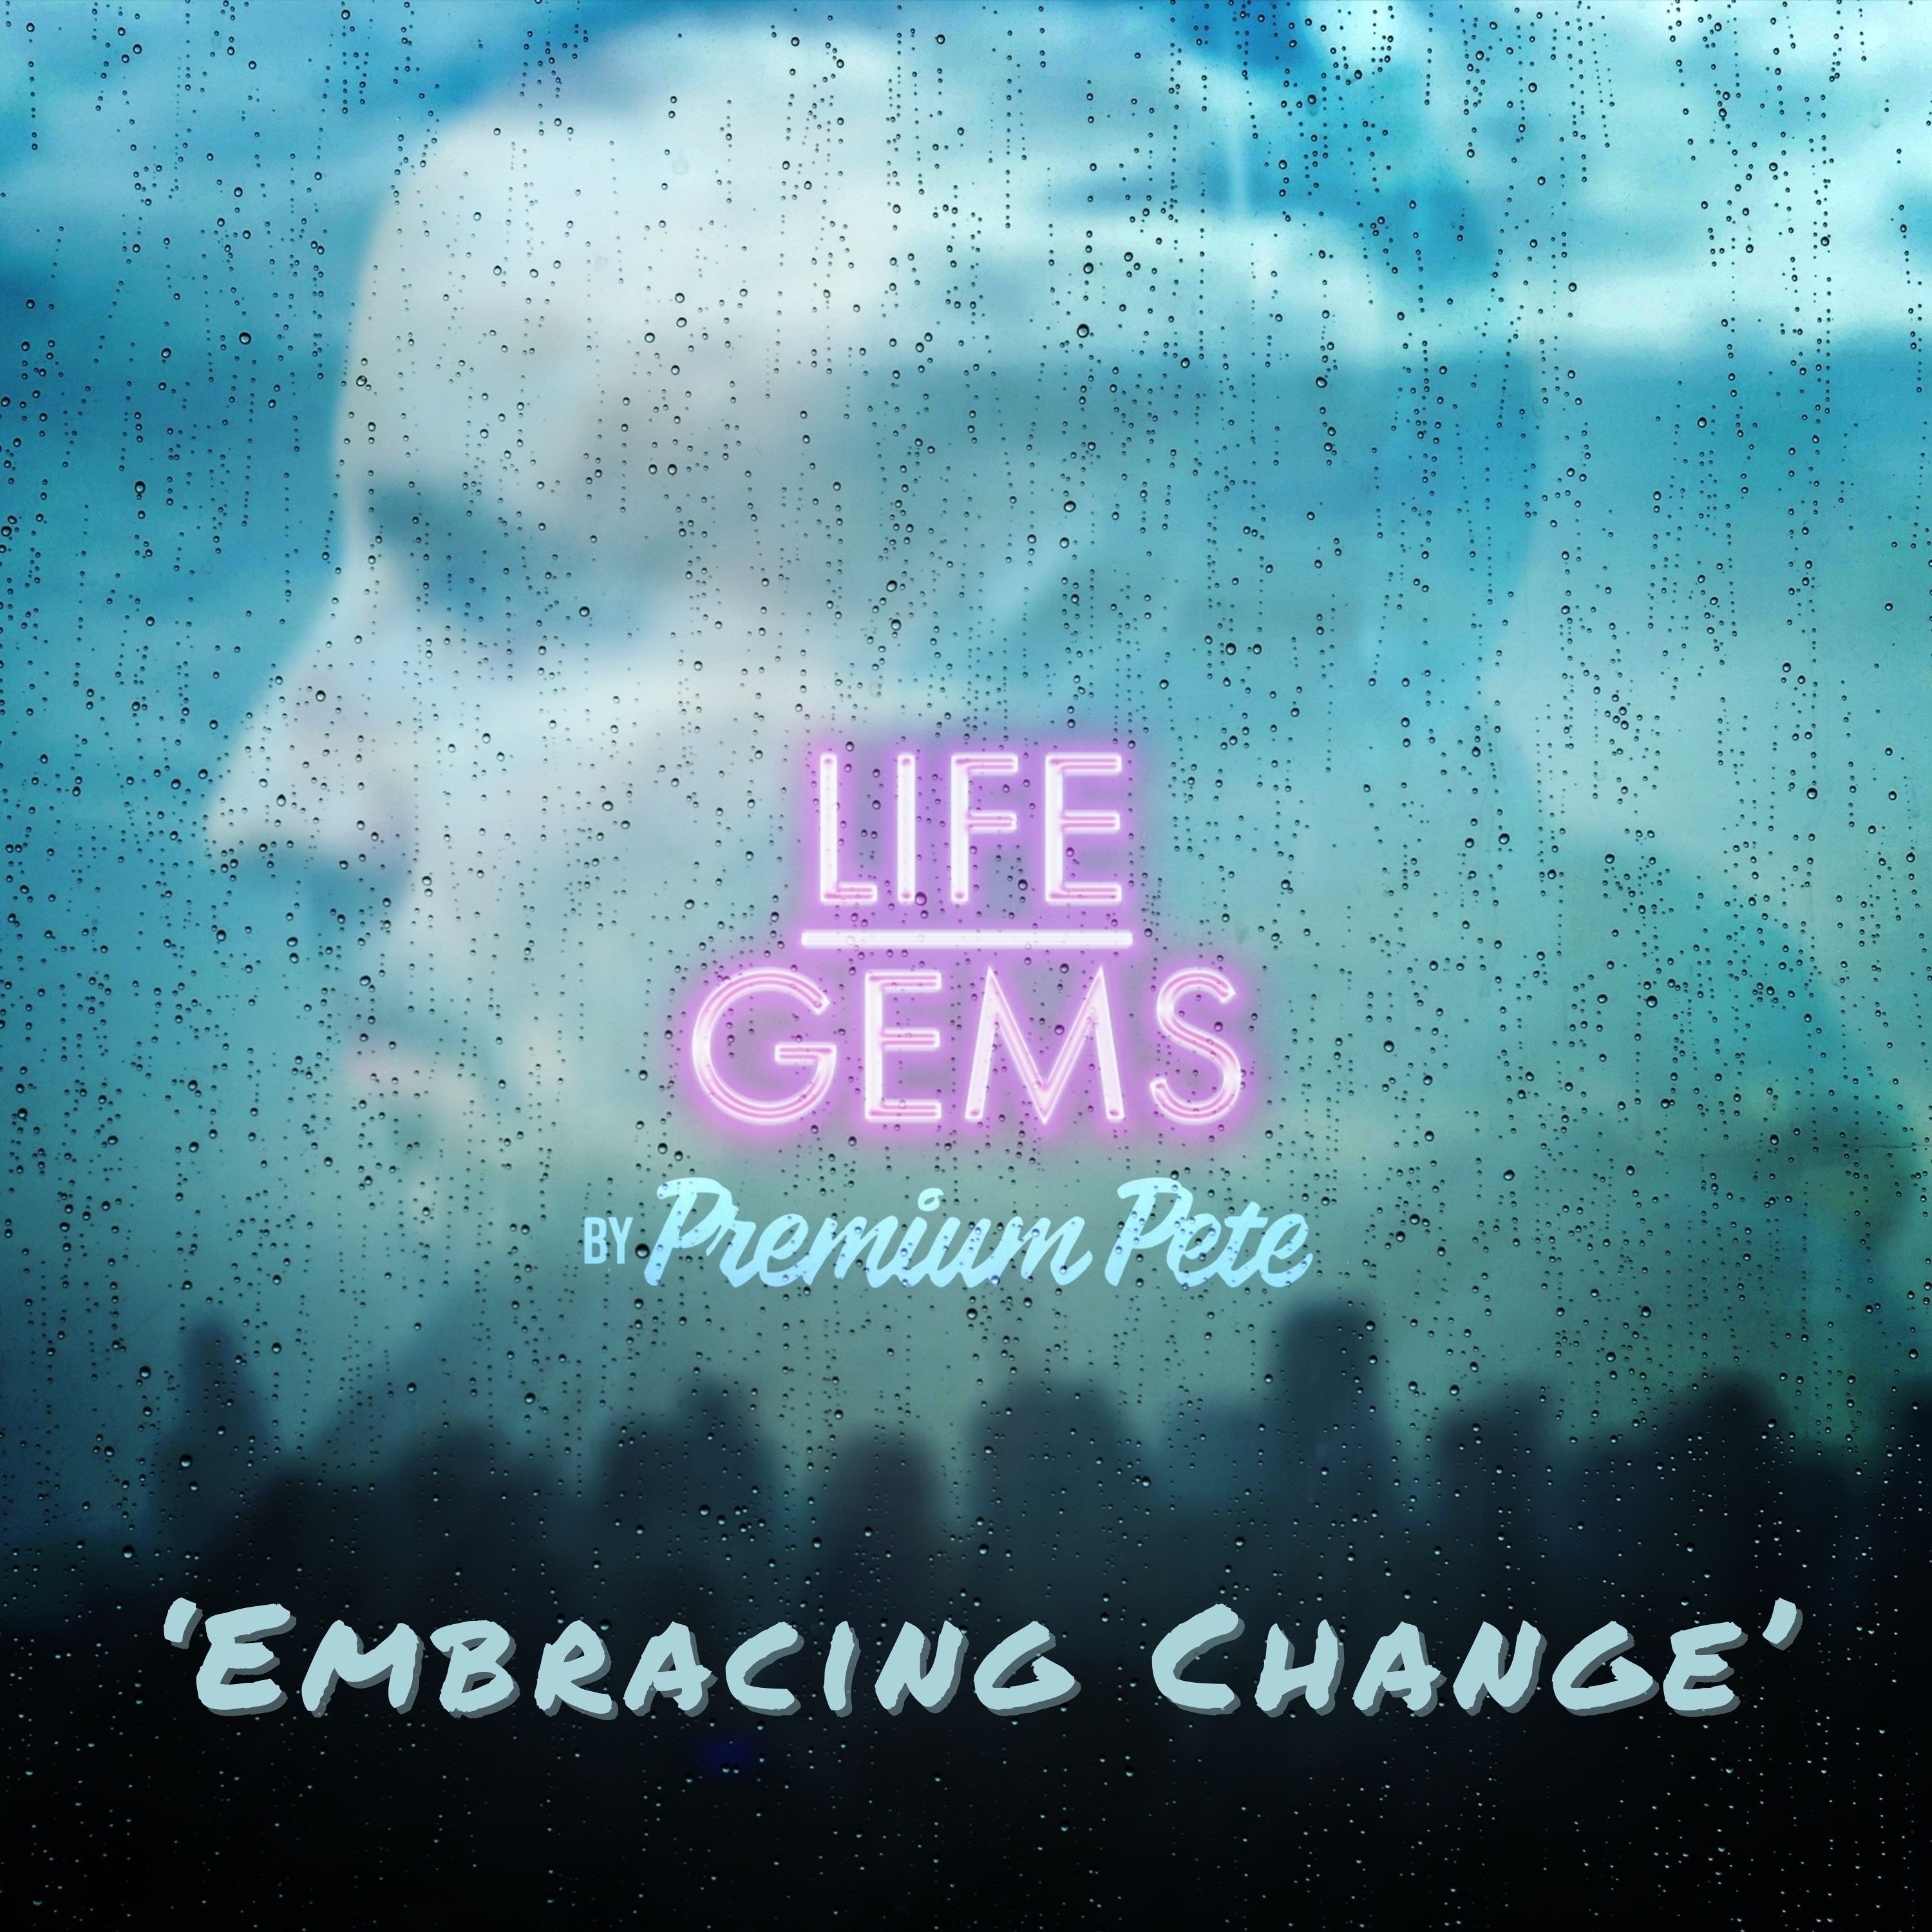 Life Gems "Embracing Change"